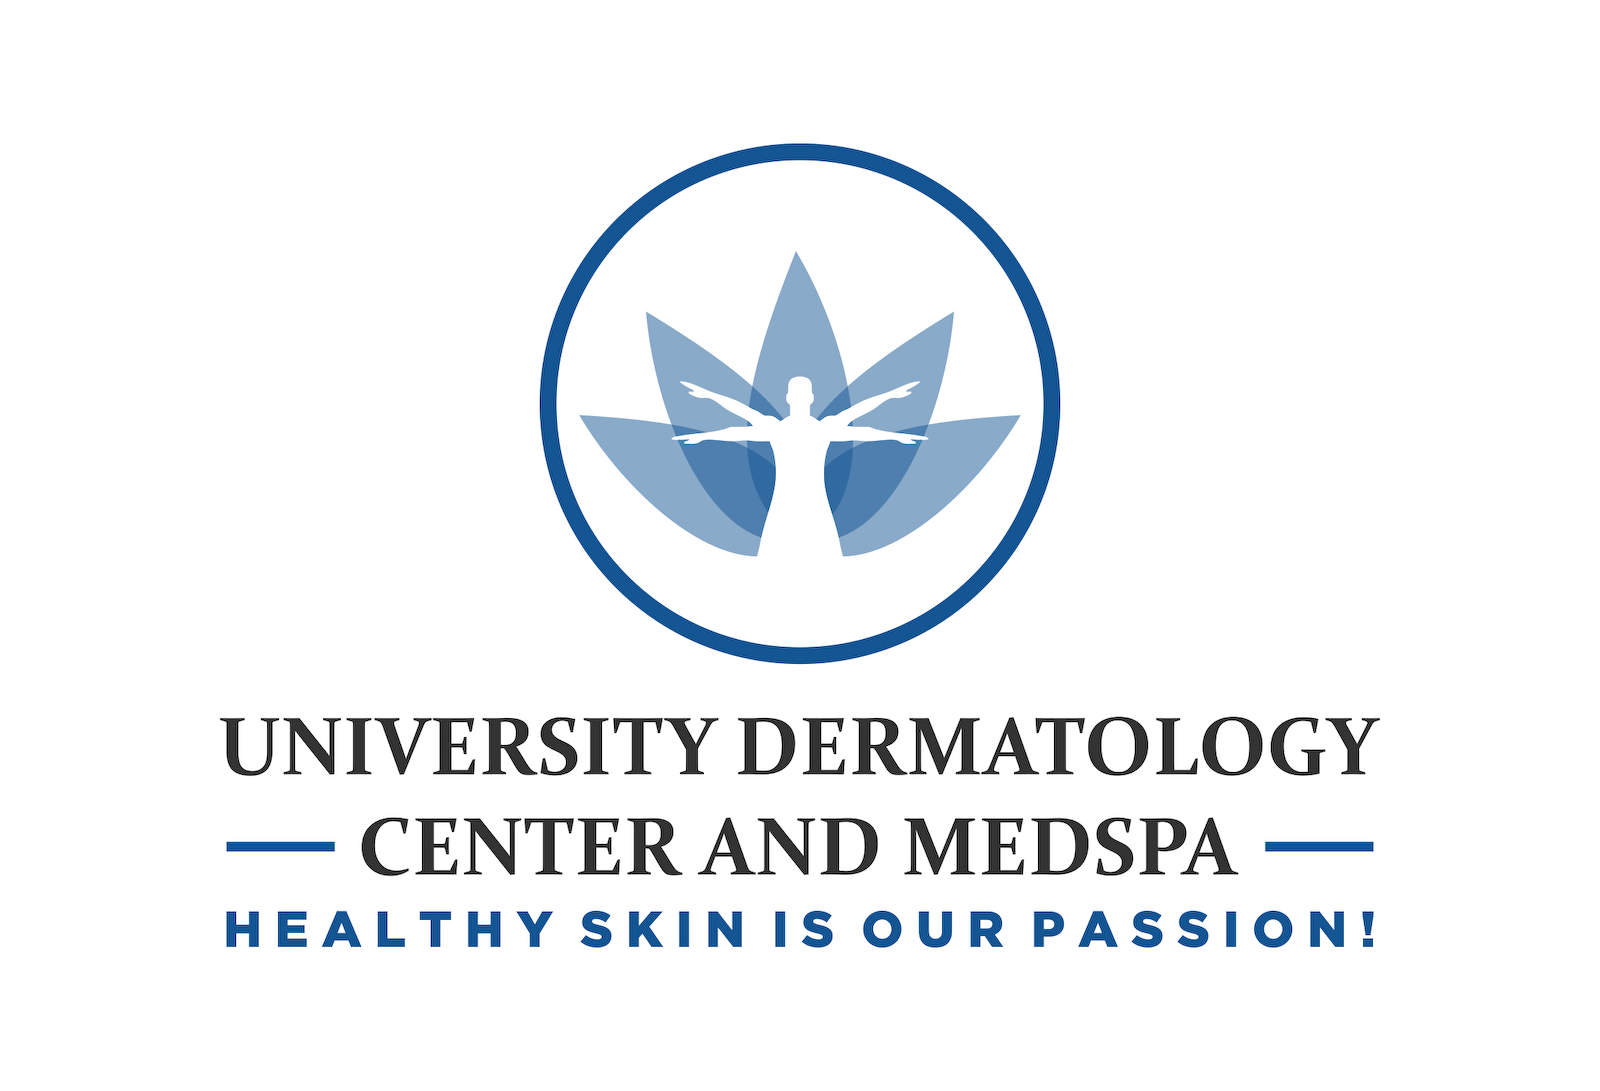 University Dermatology Center and Medspa